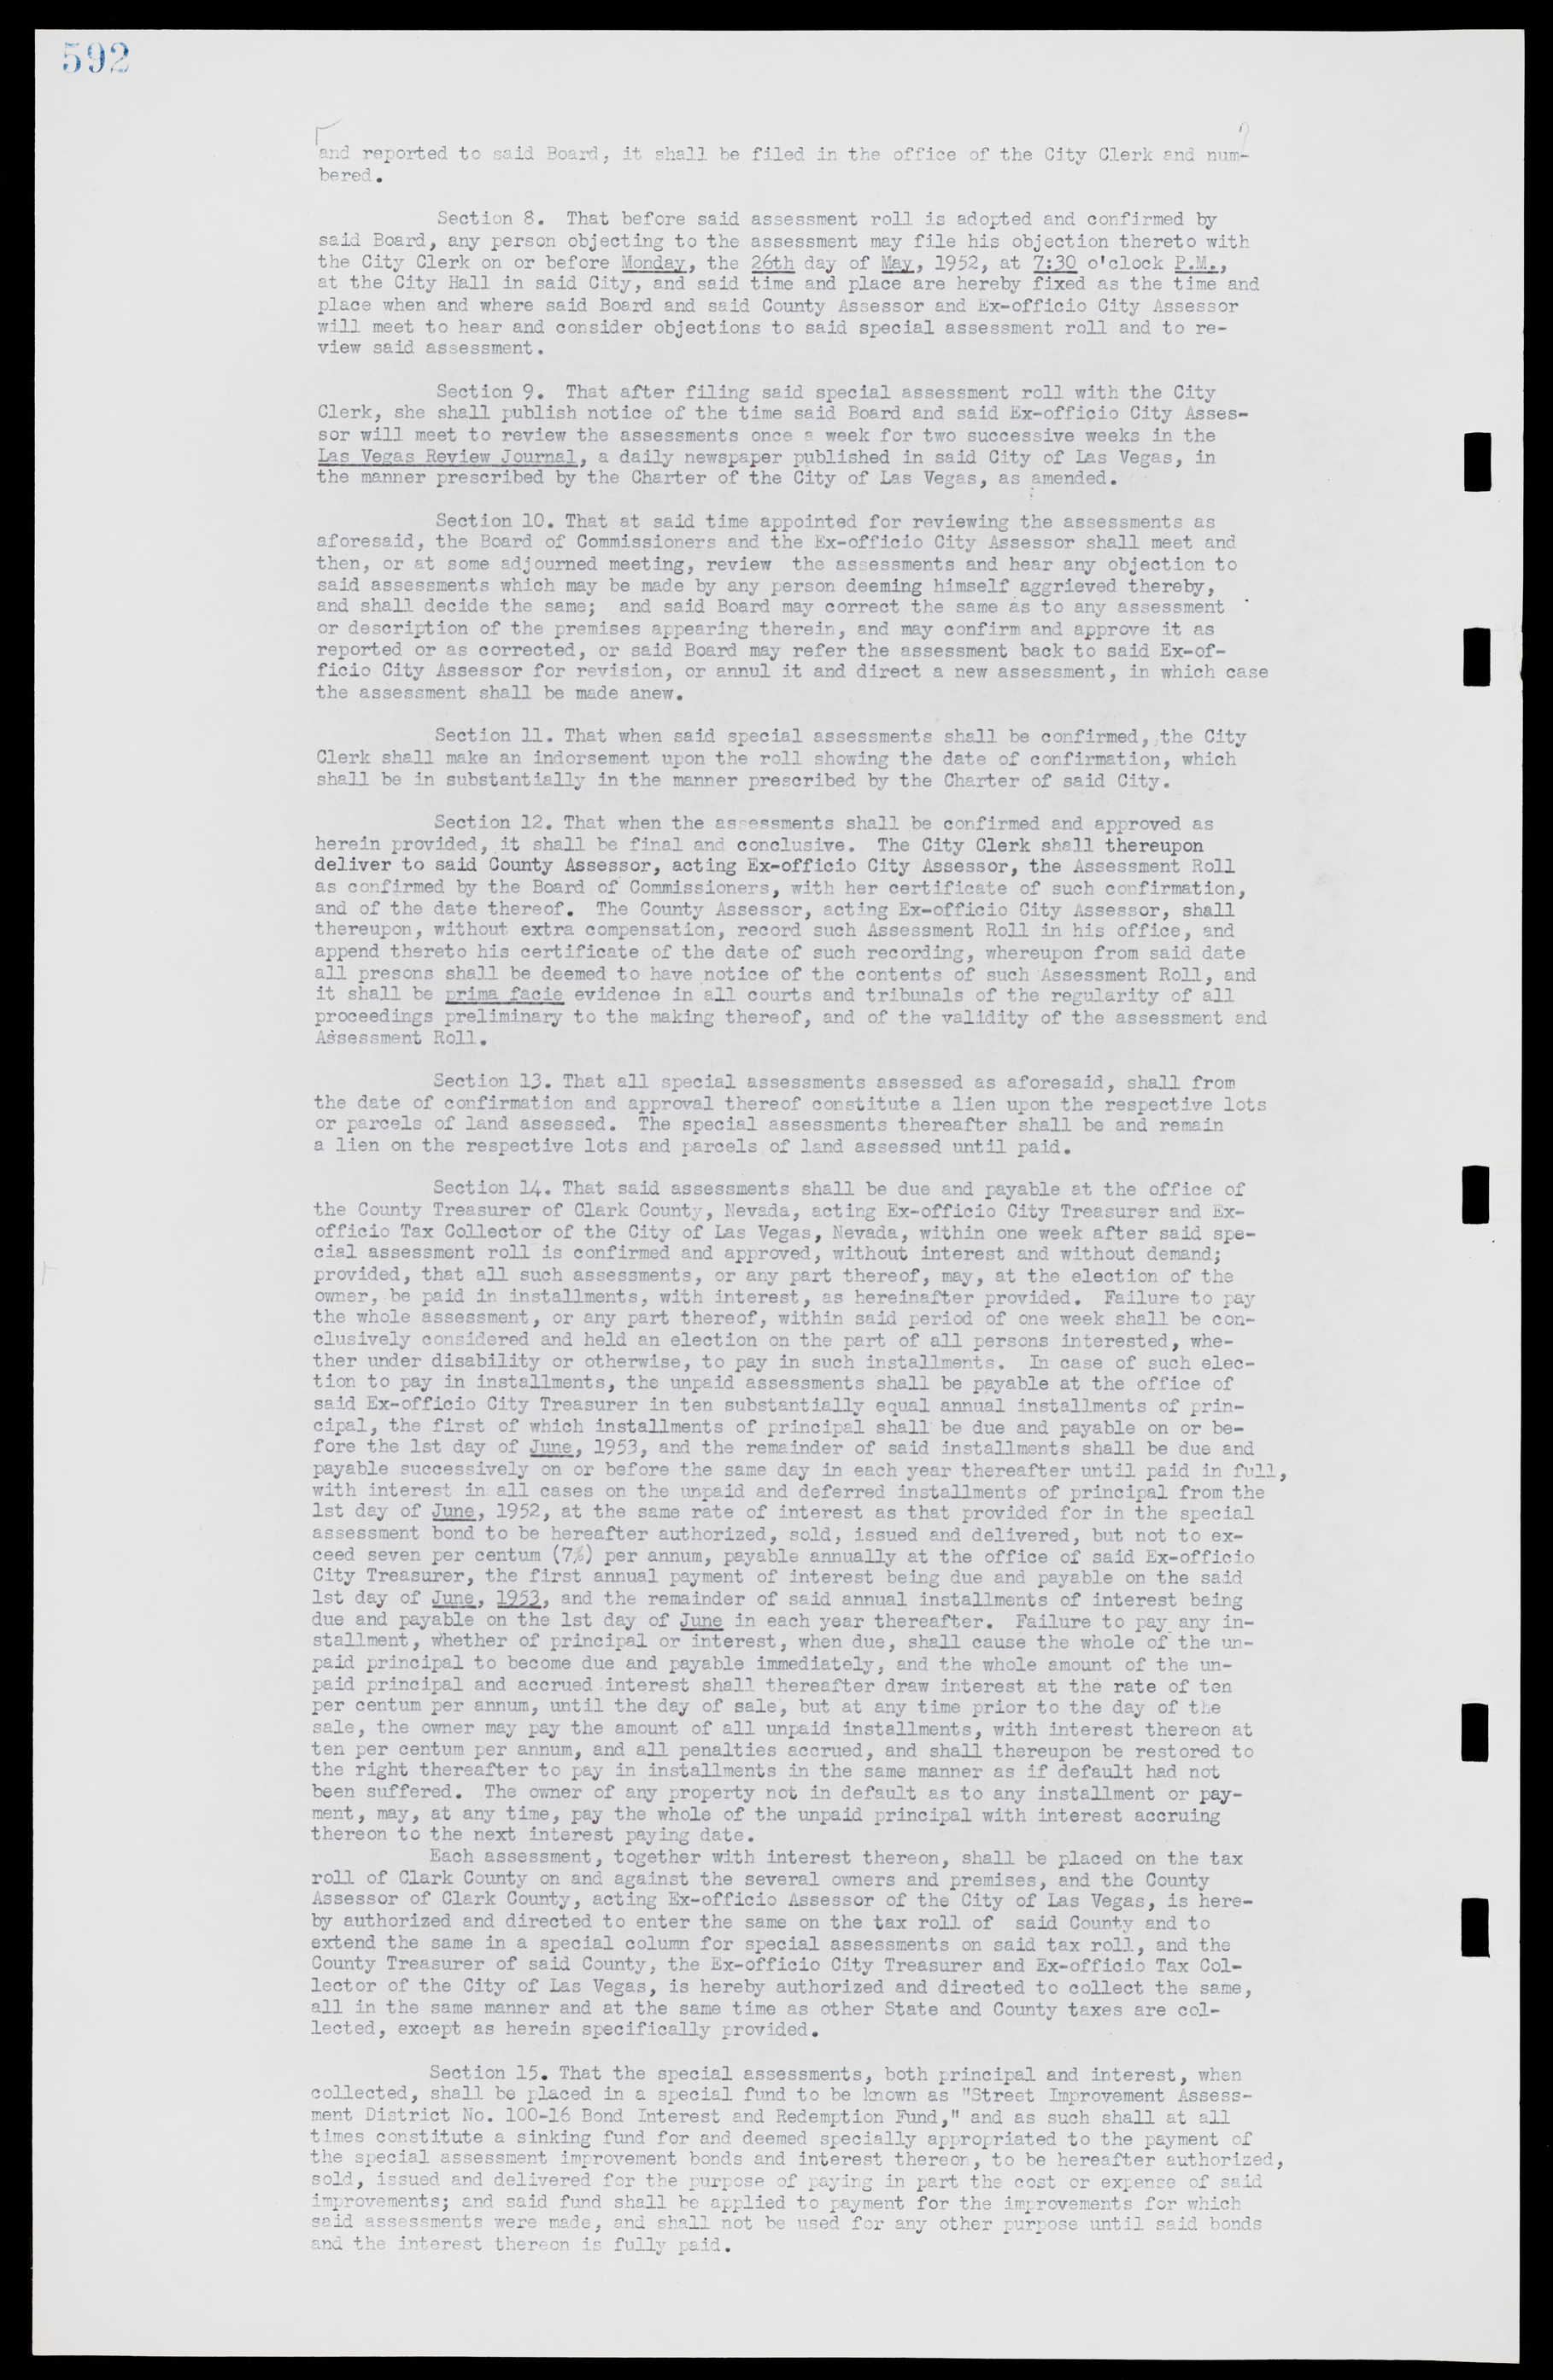 Las Vegas City Commission Minutes, November 7, 1949 to May 21, 1952, lvc000007-610